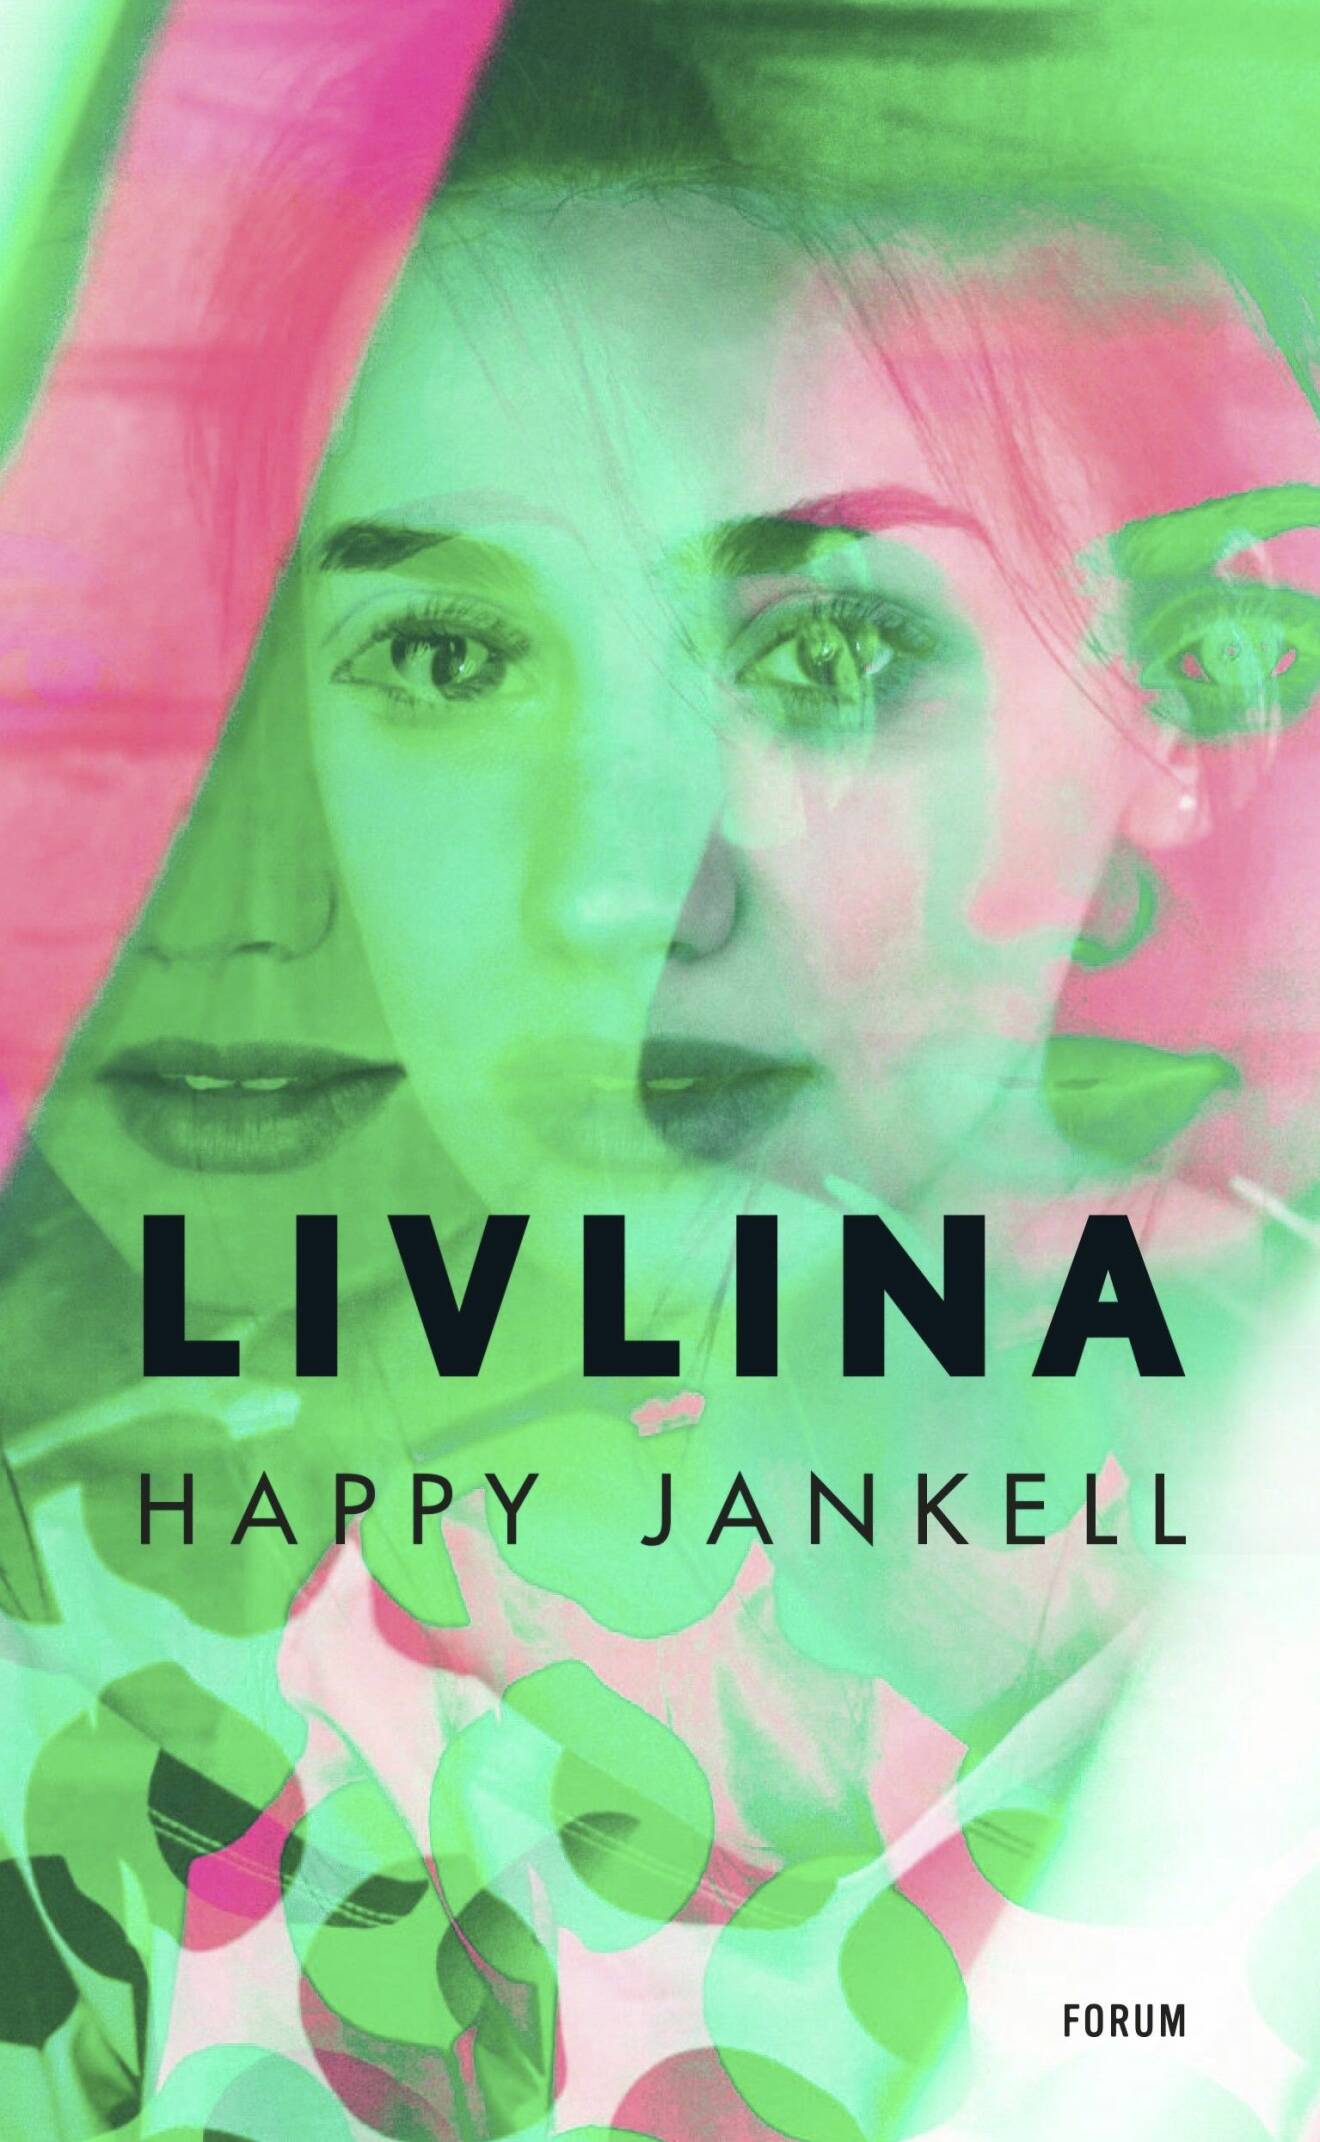 Livlina, av Happy Jankell (Forum).